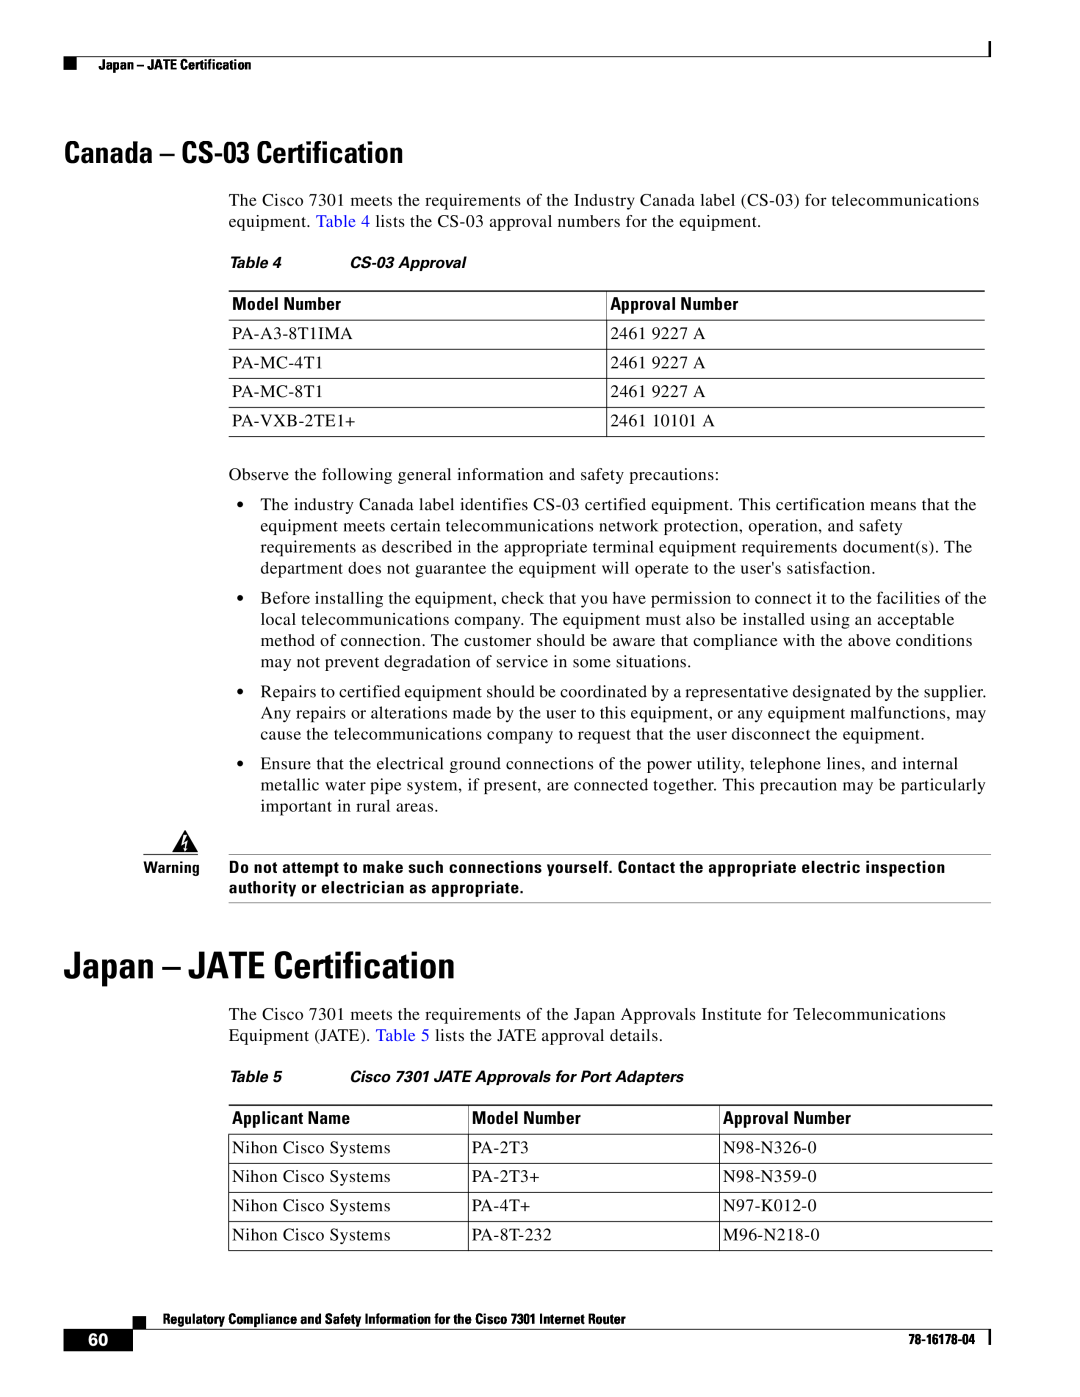 Cisco Systems CISCO7301 manual Japan - JATE Certification, Canada - CS-03 Certification 